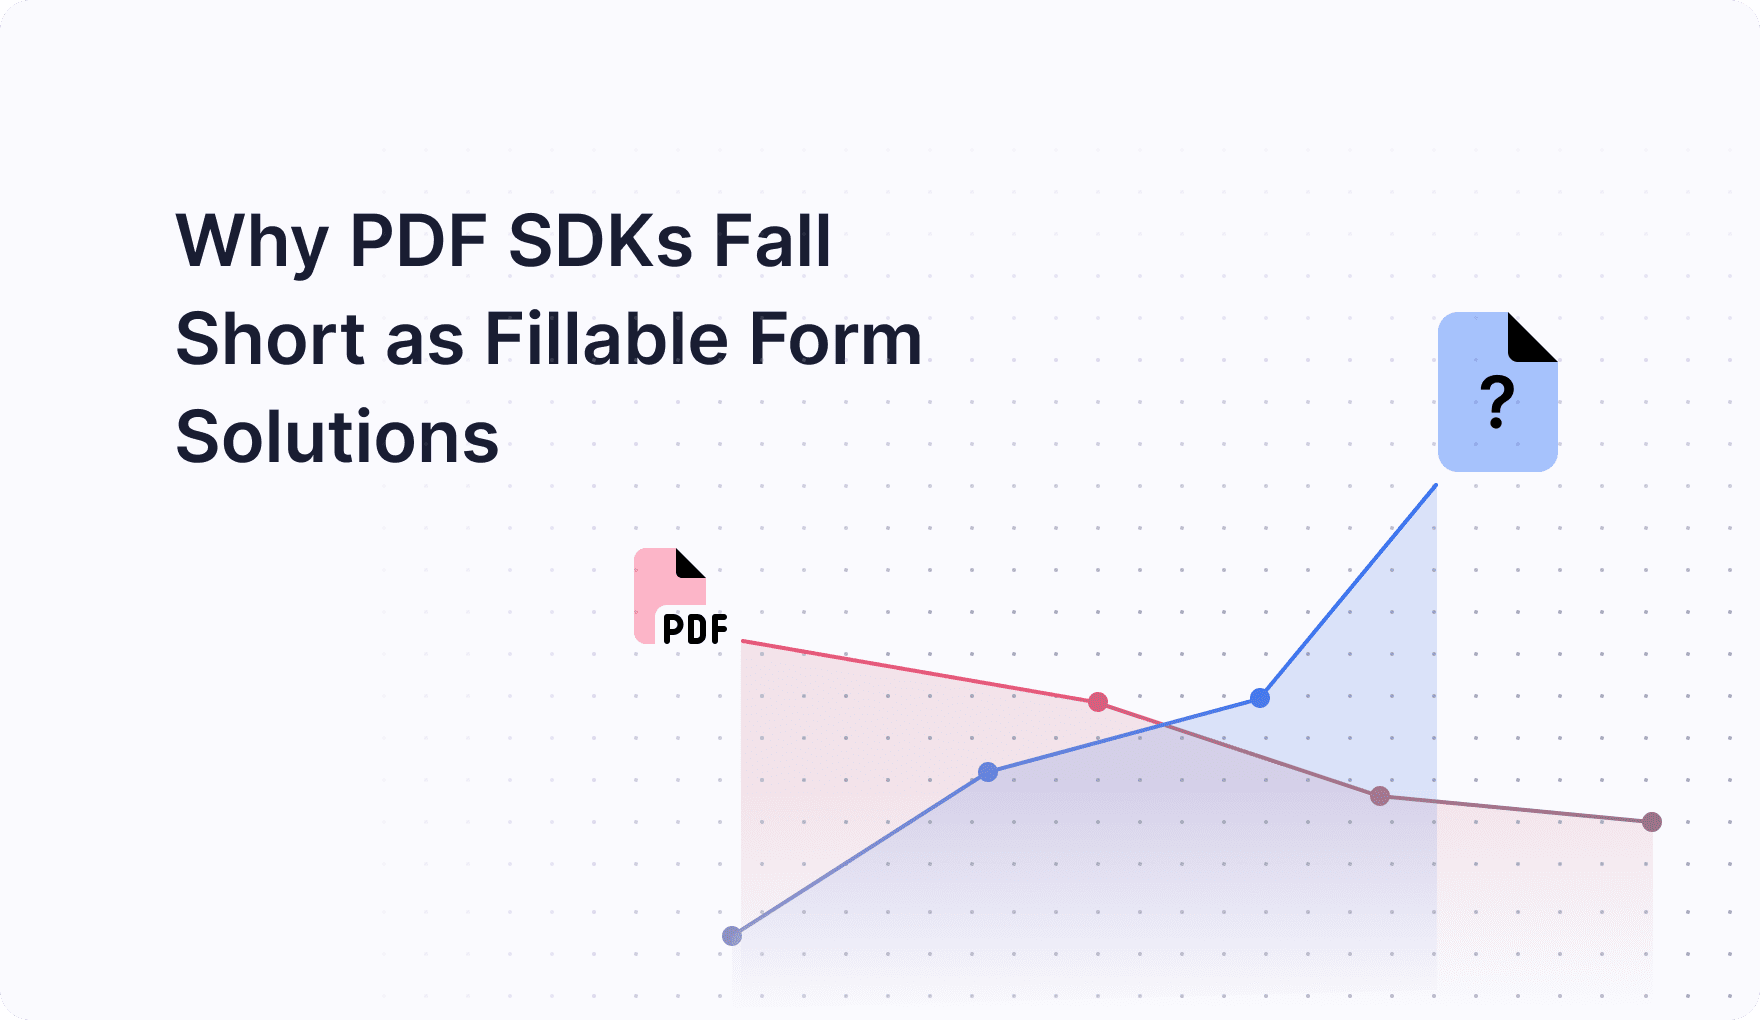 PDF SDKs fall short as fillable forms